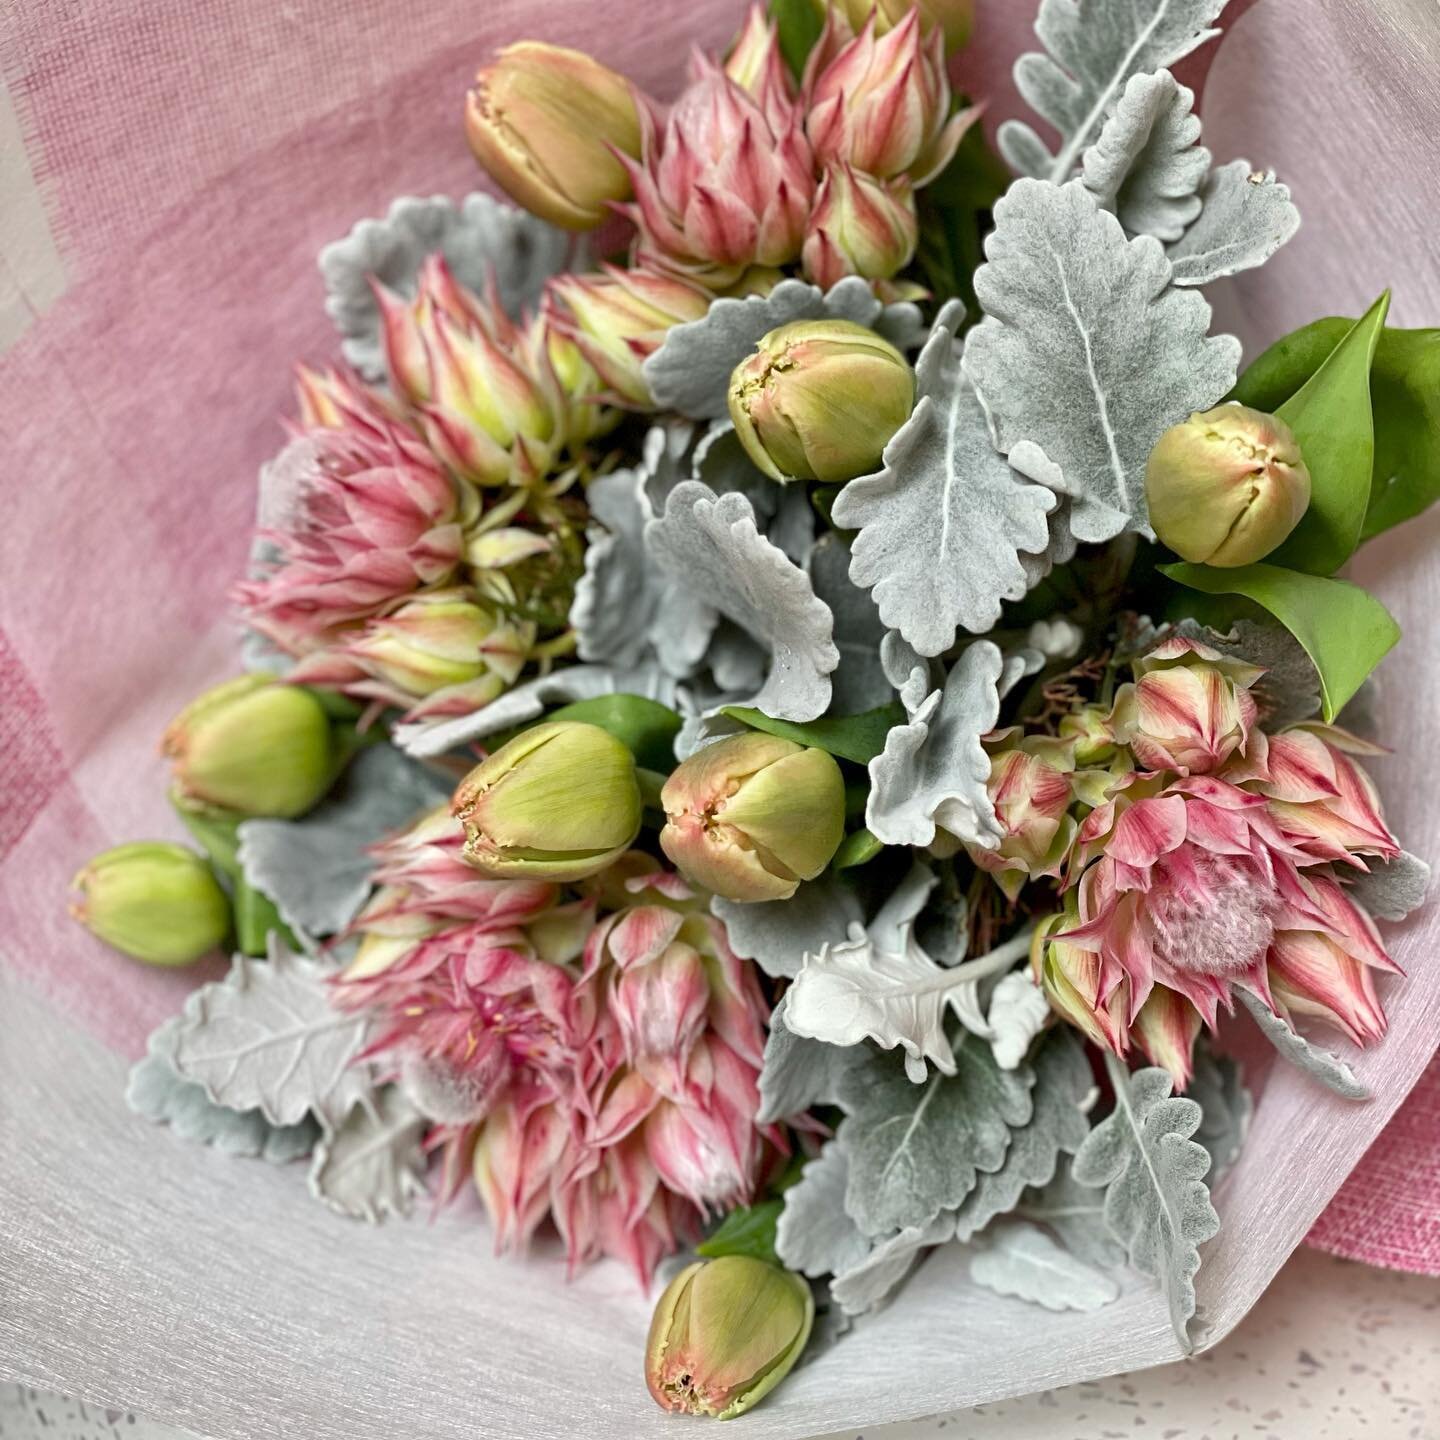 Today&rsquo;s Birthday Bouquet 💕
.
.
.
.
#wednesday #wednesdayvibes #wednesdayblooms #birthdayboquet #birthdayblooms #tulips #sugarandspice #frillytulips #lockdown #flowersbringhappiness #flowers #flowersforlove #prettyflowers #carnegie #3163 
#glen